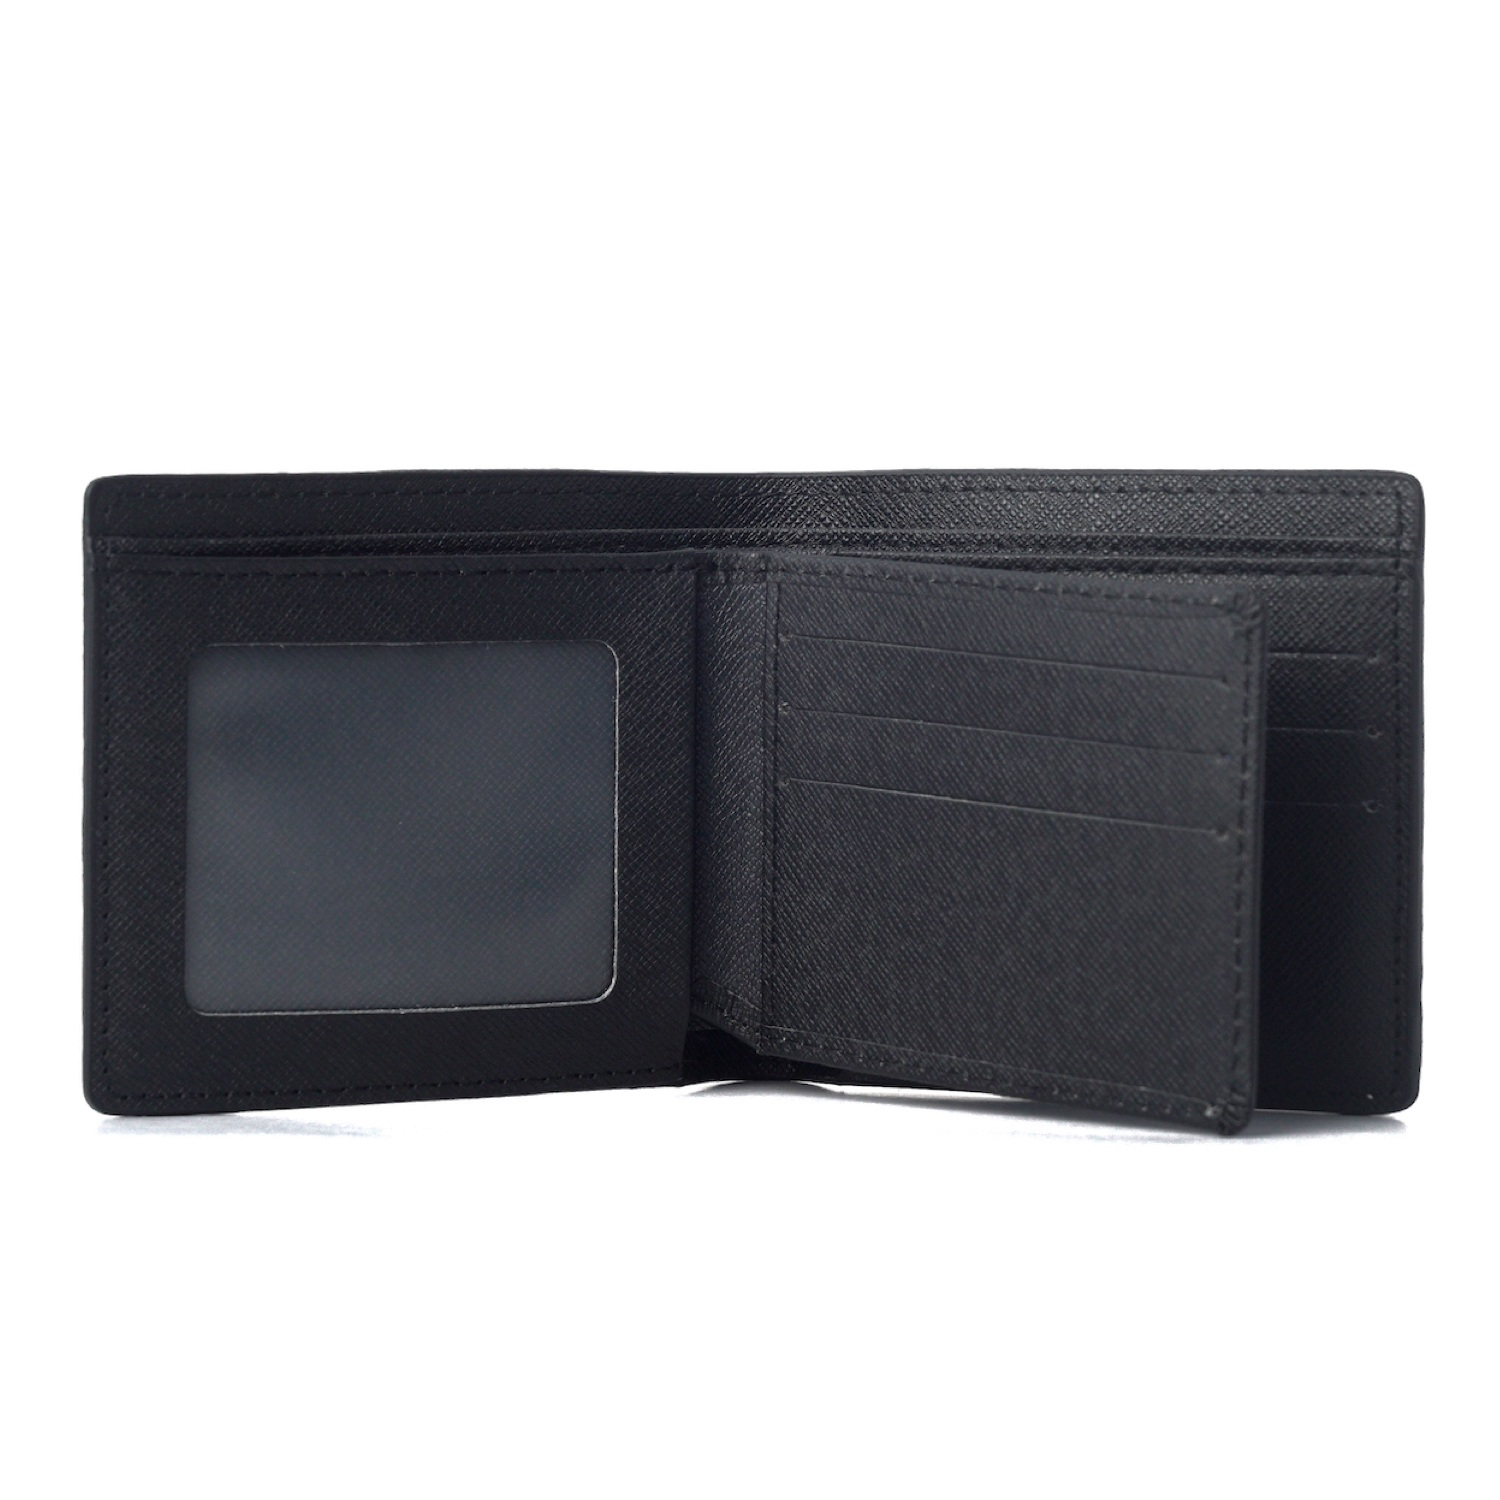 TOKOKOE - Dompet Pria Bahan Kulit Premium Import - H Togo Leather Black